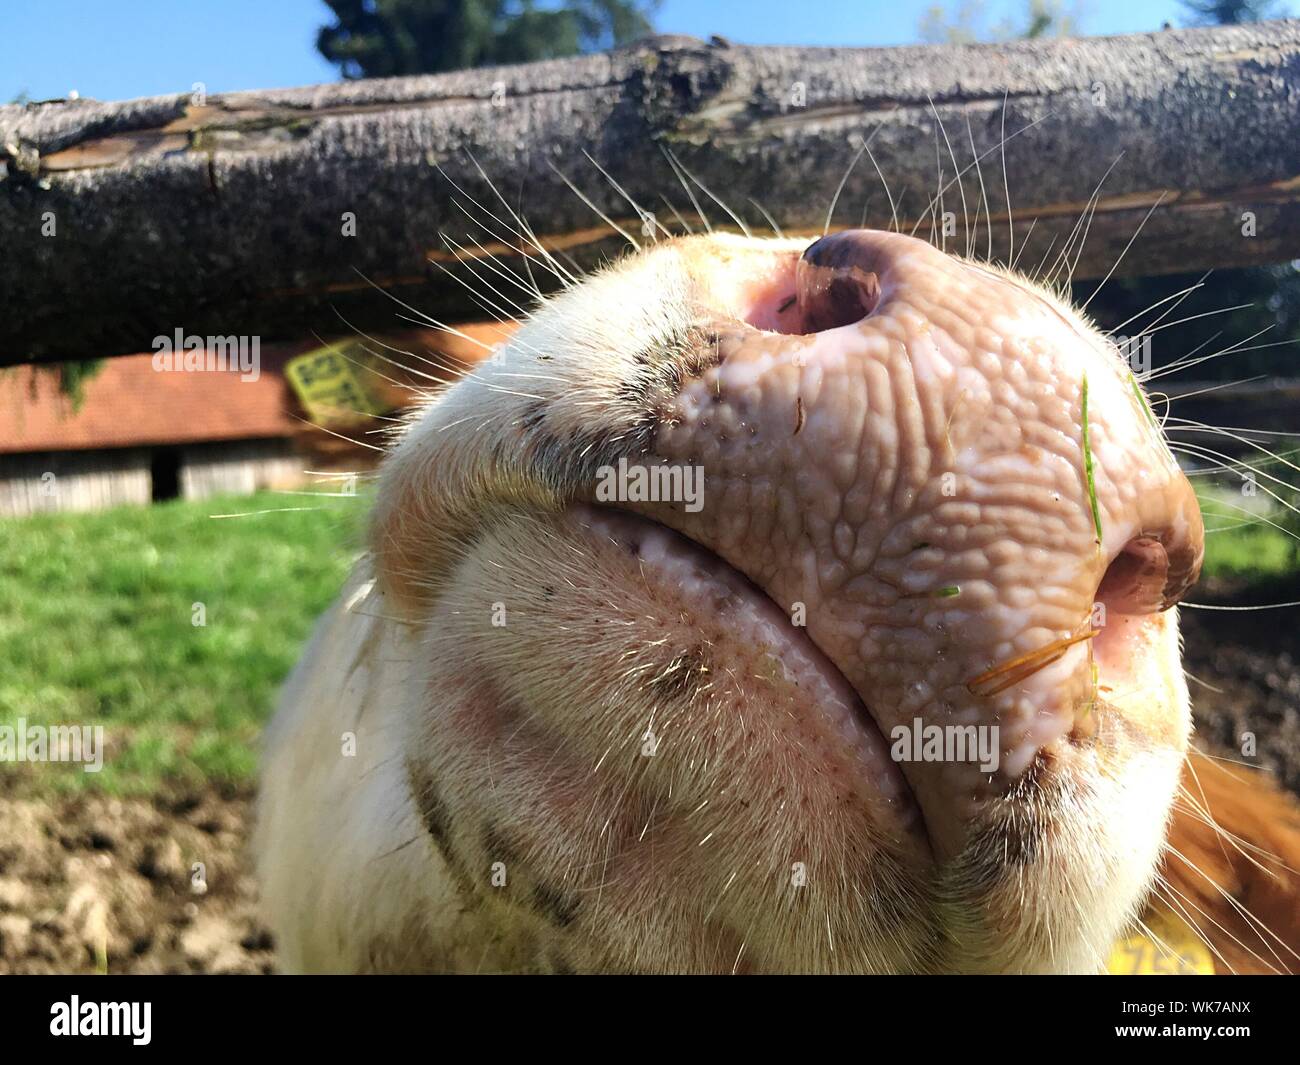 Close-up Of Pig Snout Peeking Through Wood Fence Stock Photo